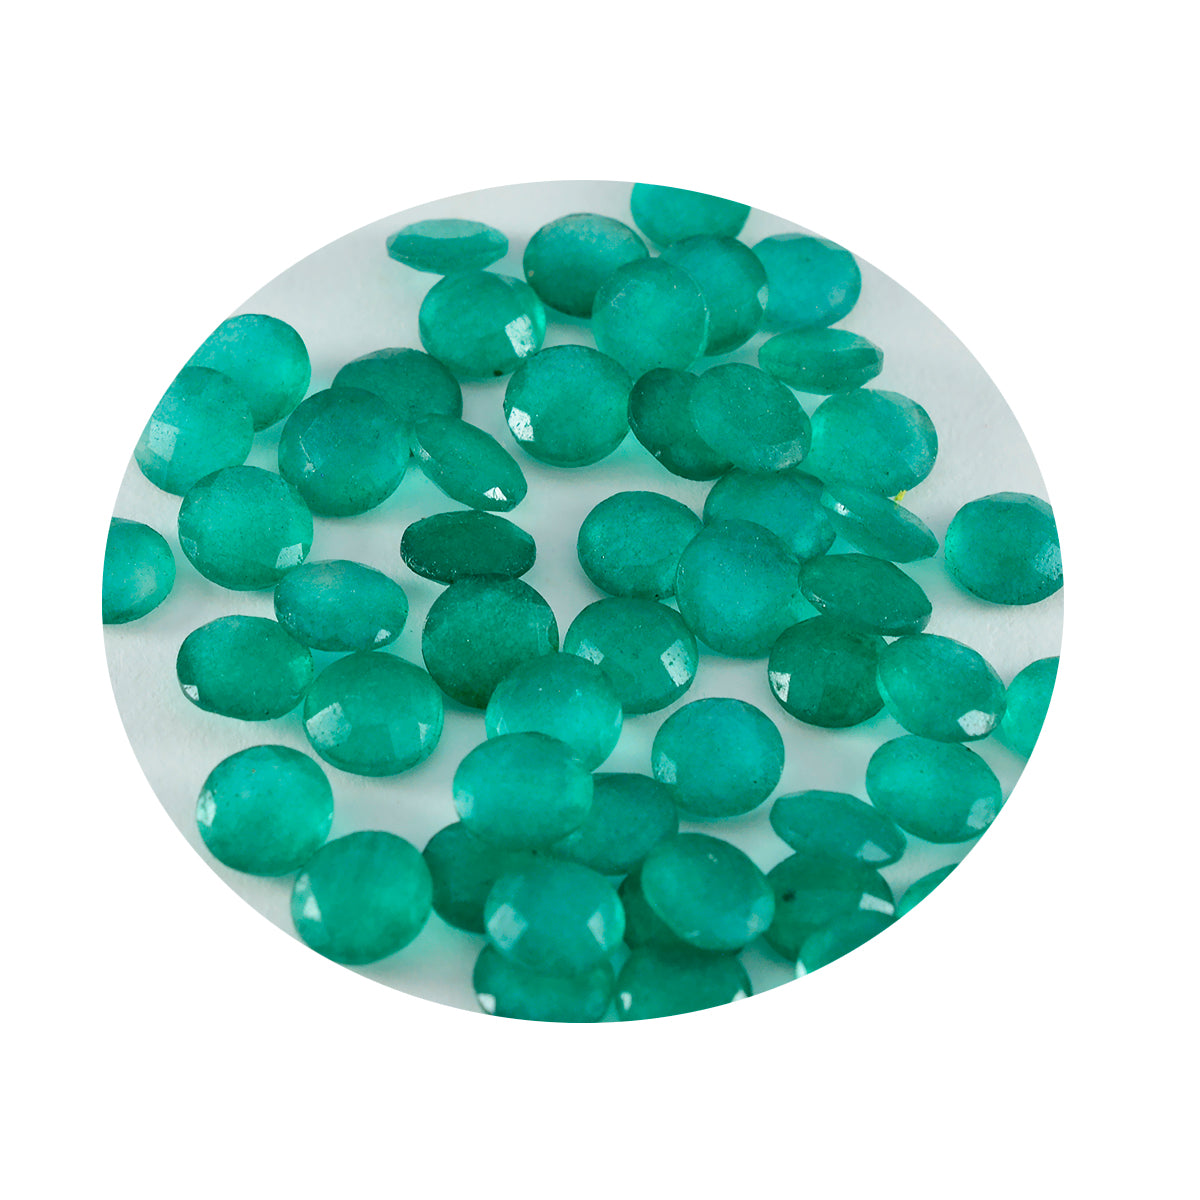 Riyogems 1PC Genuine Green Jasper Faceted 3x3 mm Round Shape Nice Quality Gems